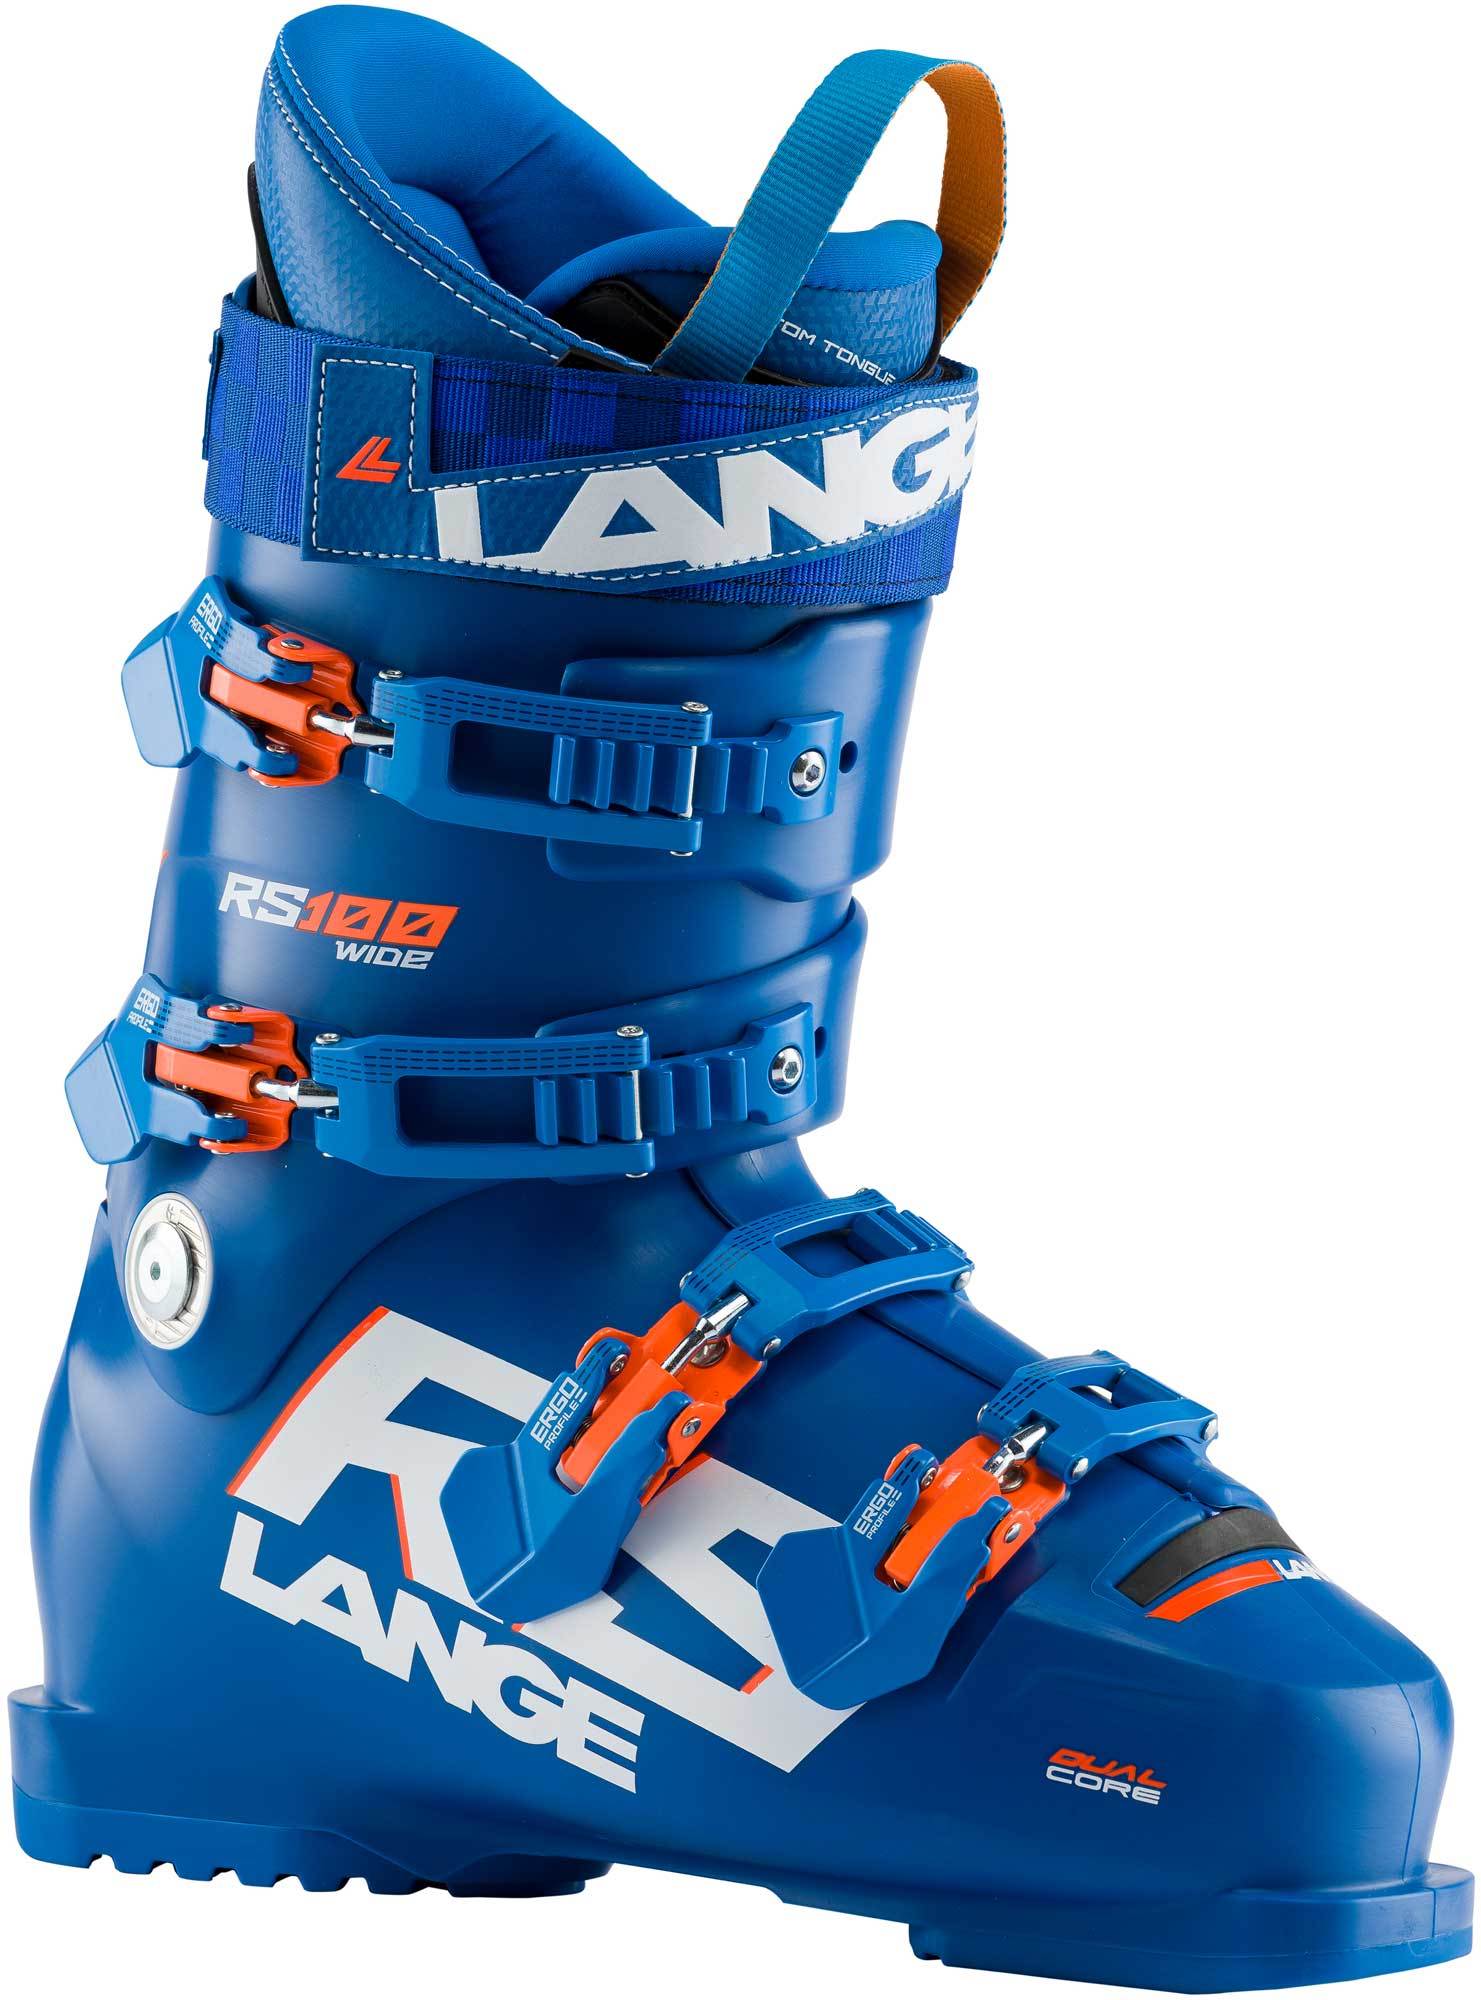 Lange RS 100 Wide power blue (2019/20) - Skischuhe